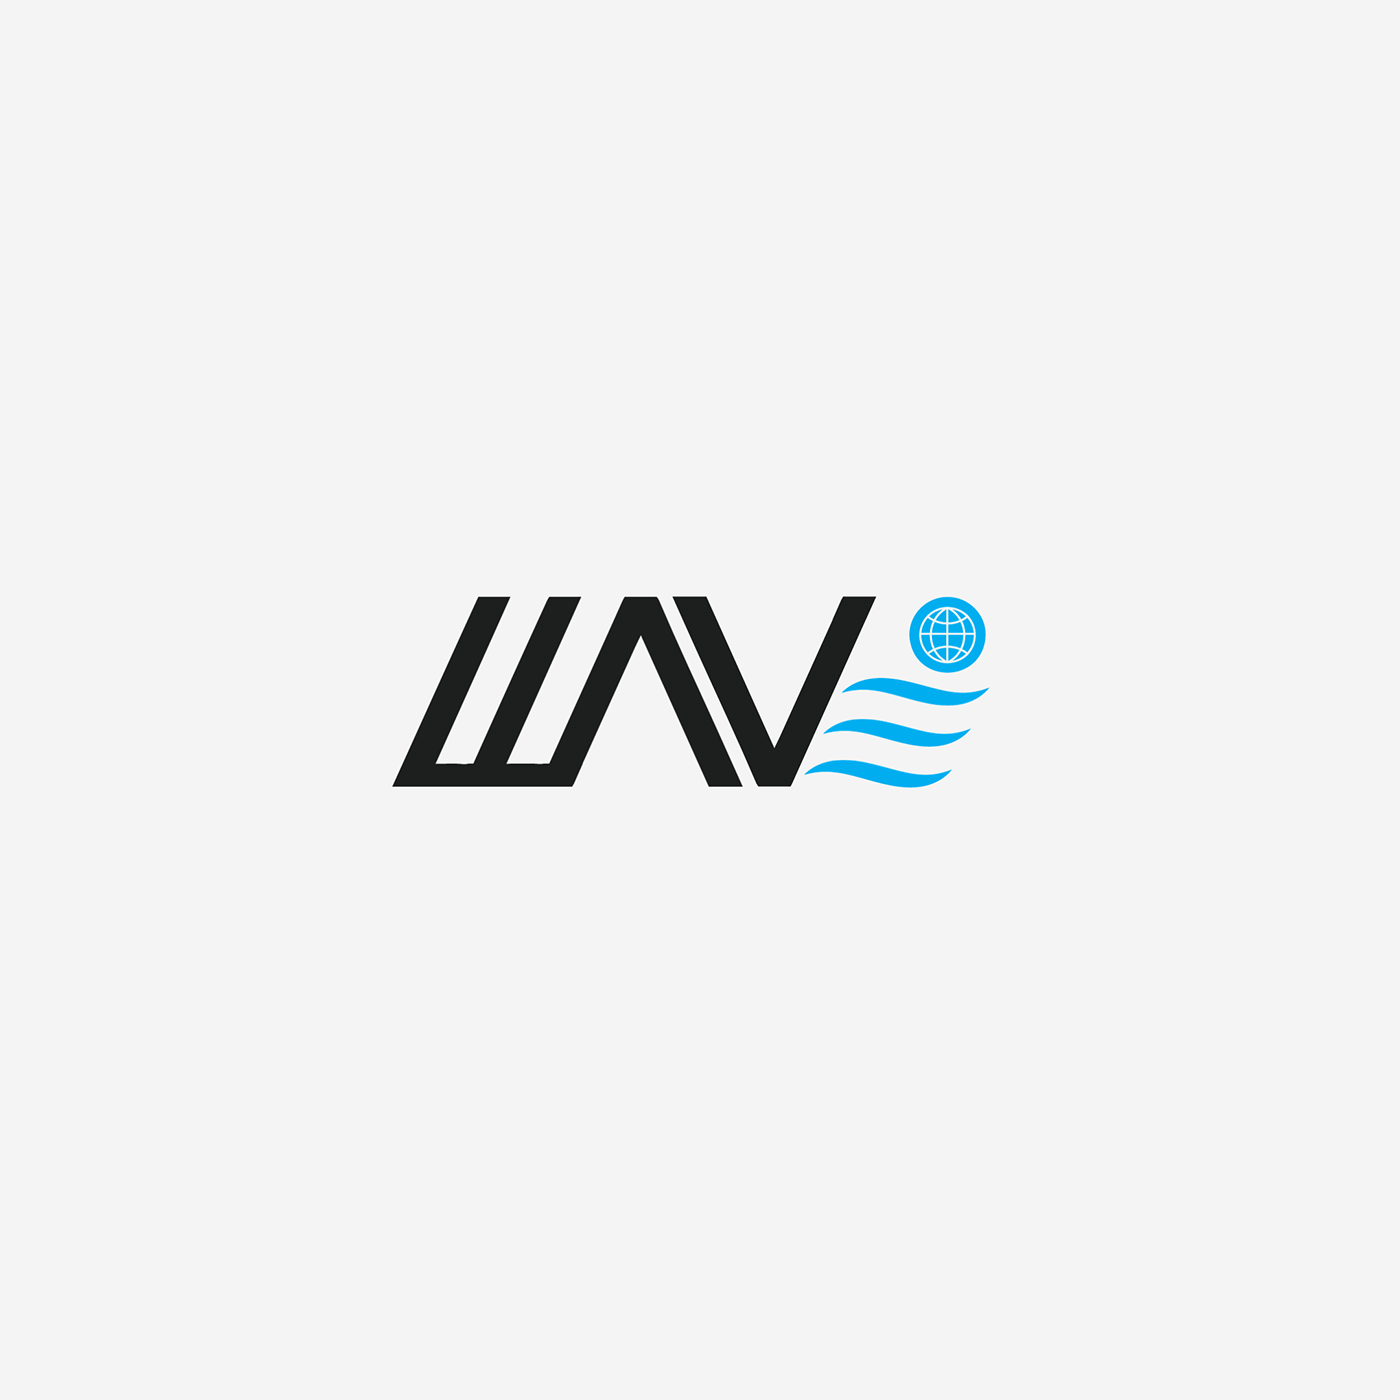 wave waves Web connect Internet communication logo